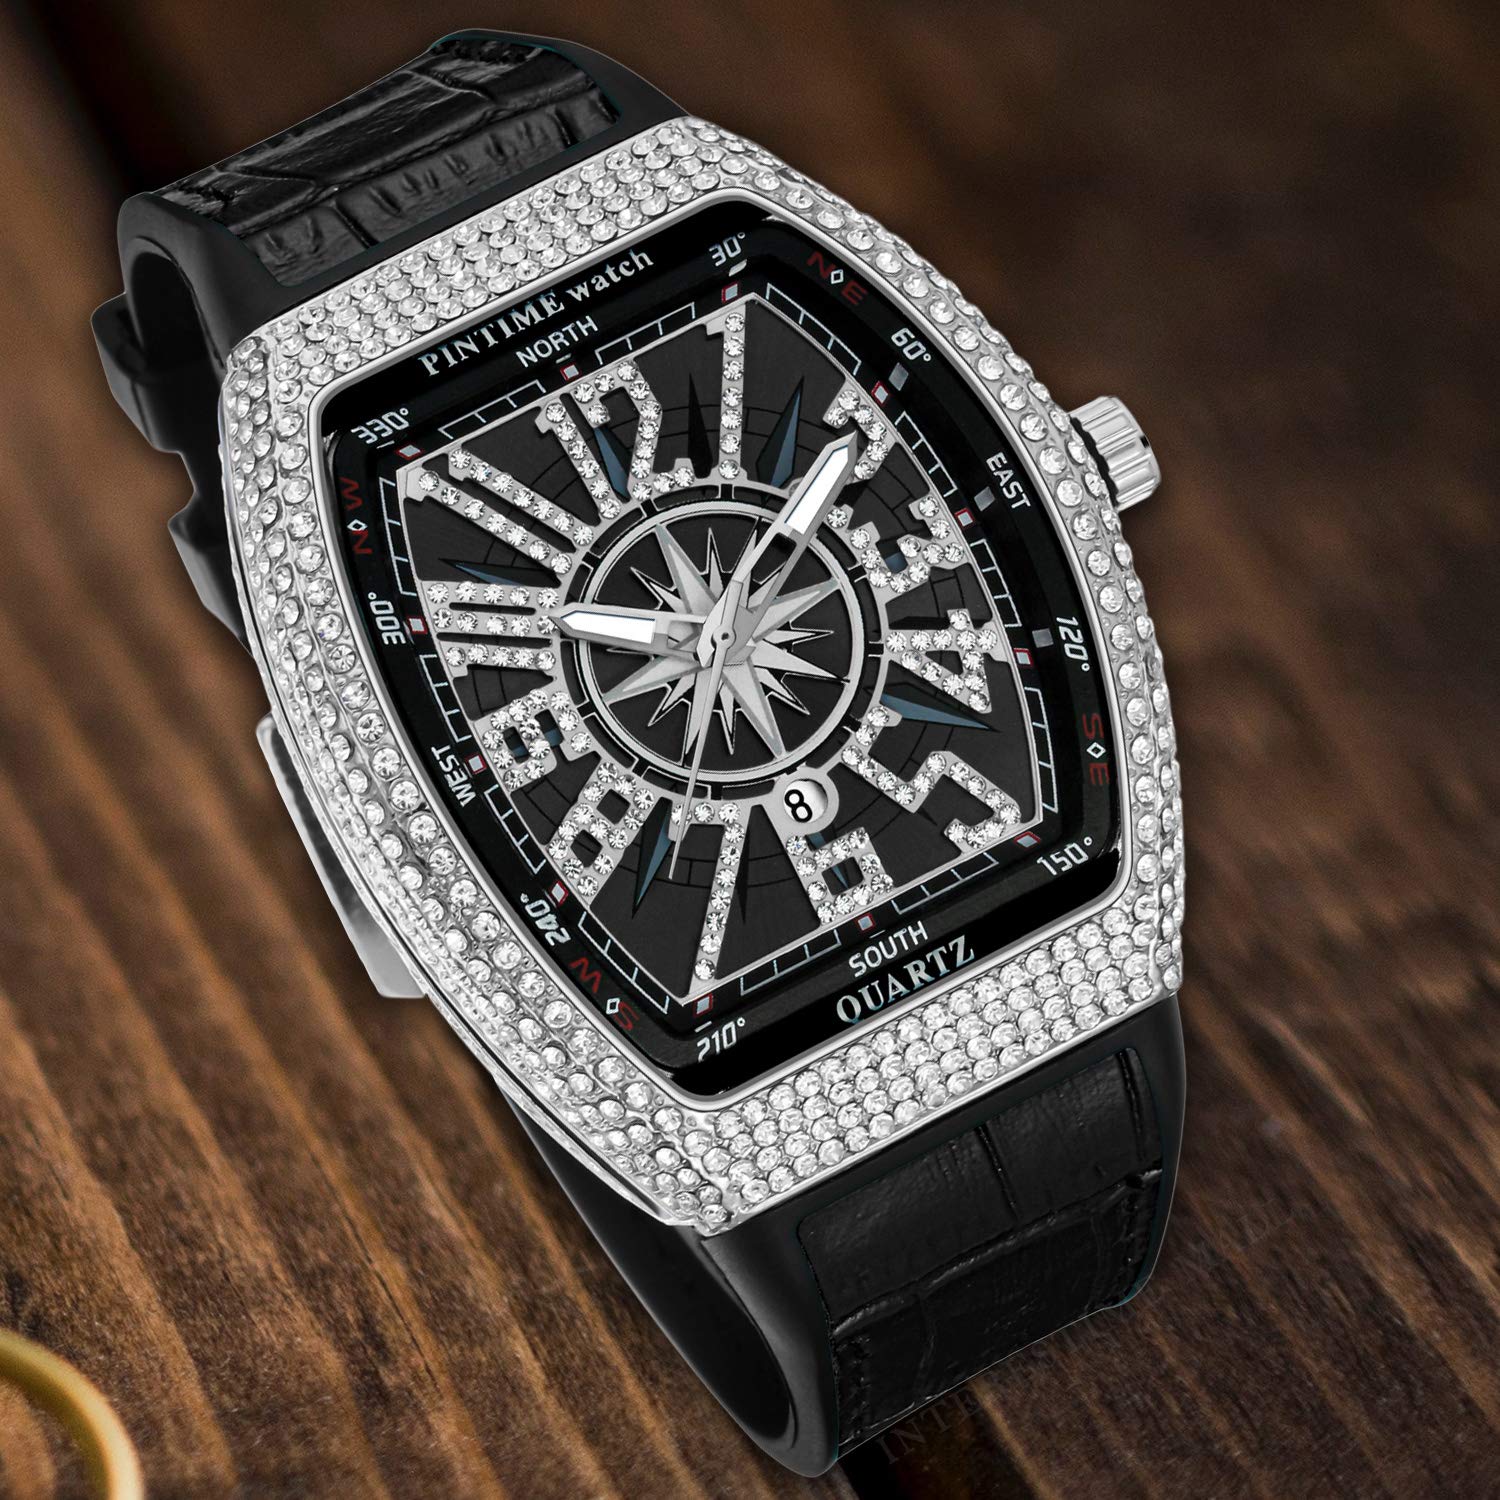 PINTIME Luxury Men's Crystal Diamond Watch Tonneau Fashion Bling Iced Out Waterproof Quartz Analog Watch for Men Leather Strap Hip Hop Rapper